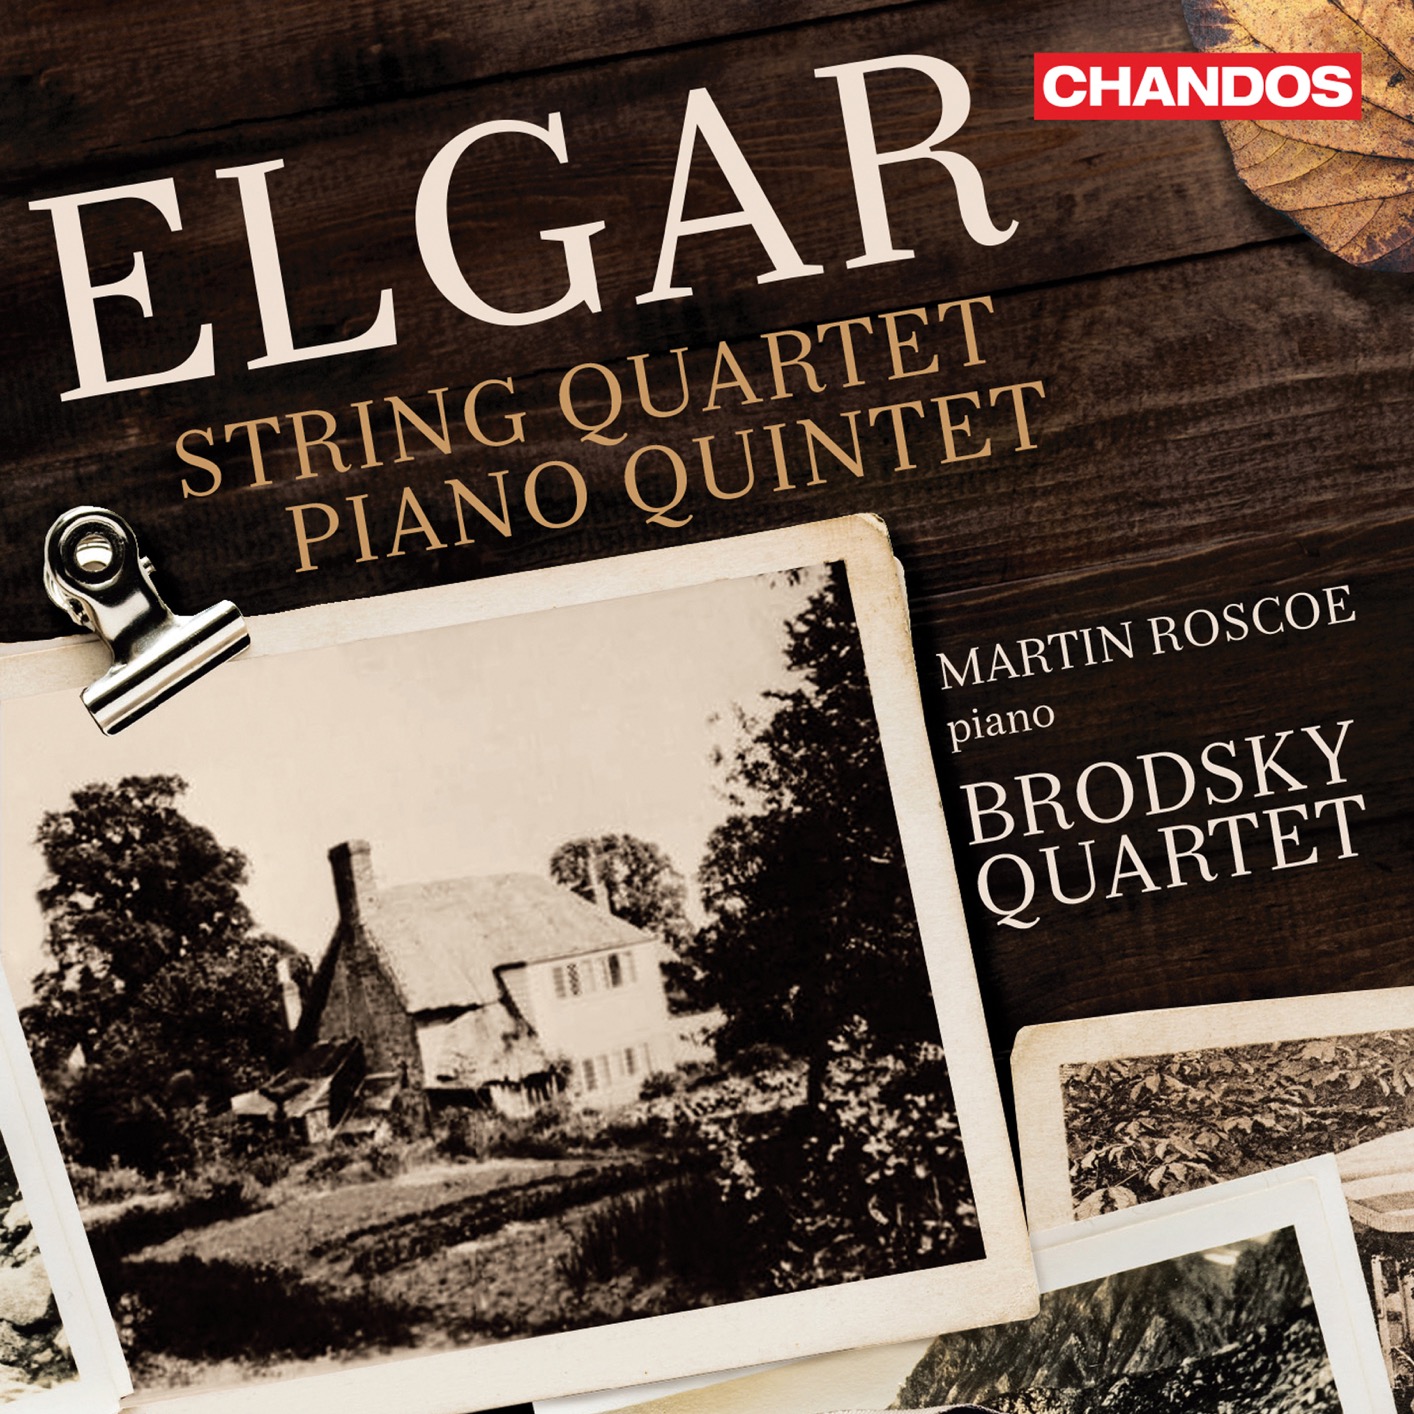 Martin Roscoe & Brodsky Quartet – Elgar: String Quartet in E Minor & Piano Quintet in A Minor (2019) [FLAC 24bit/96kHz]